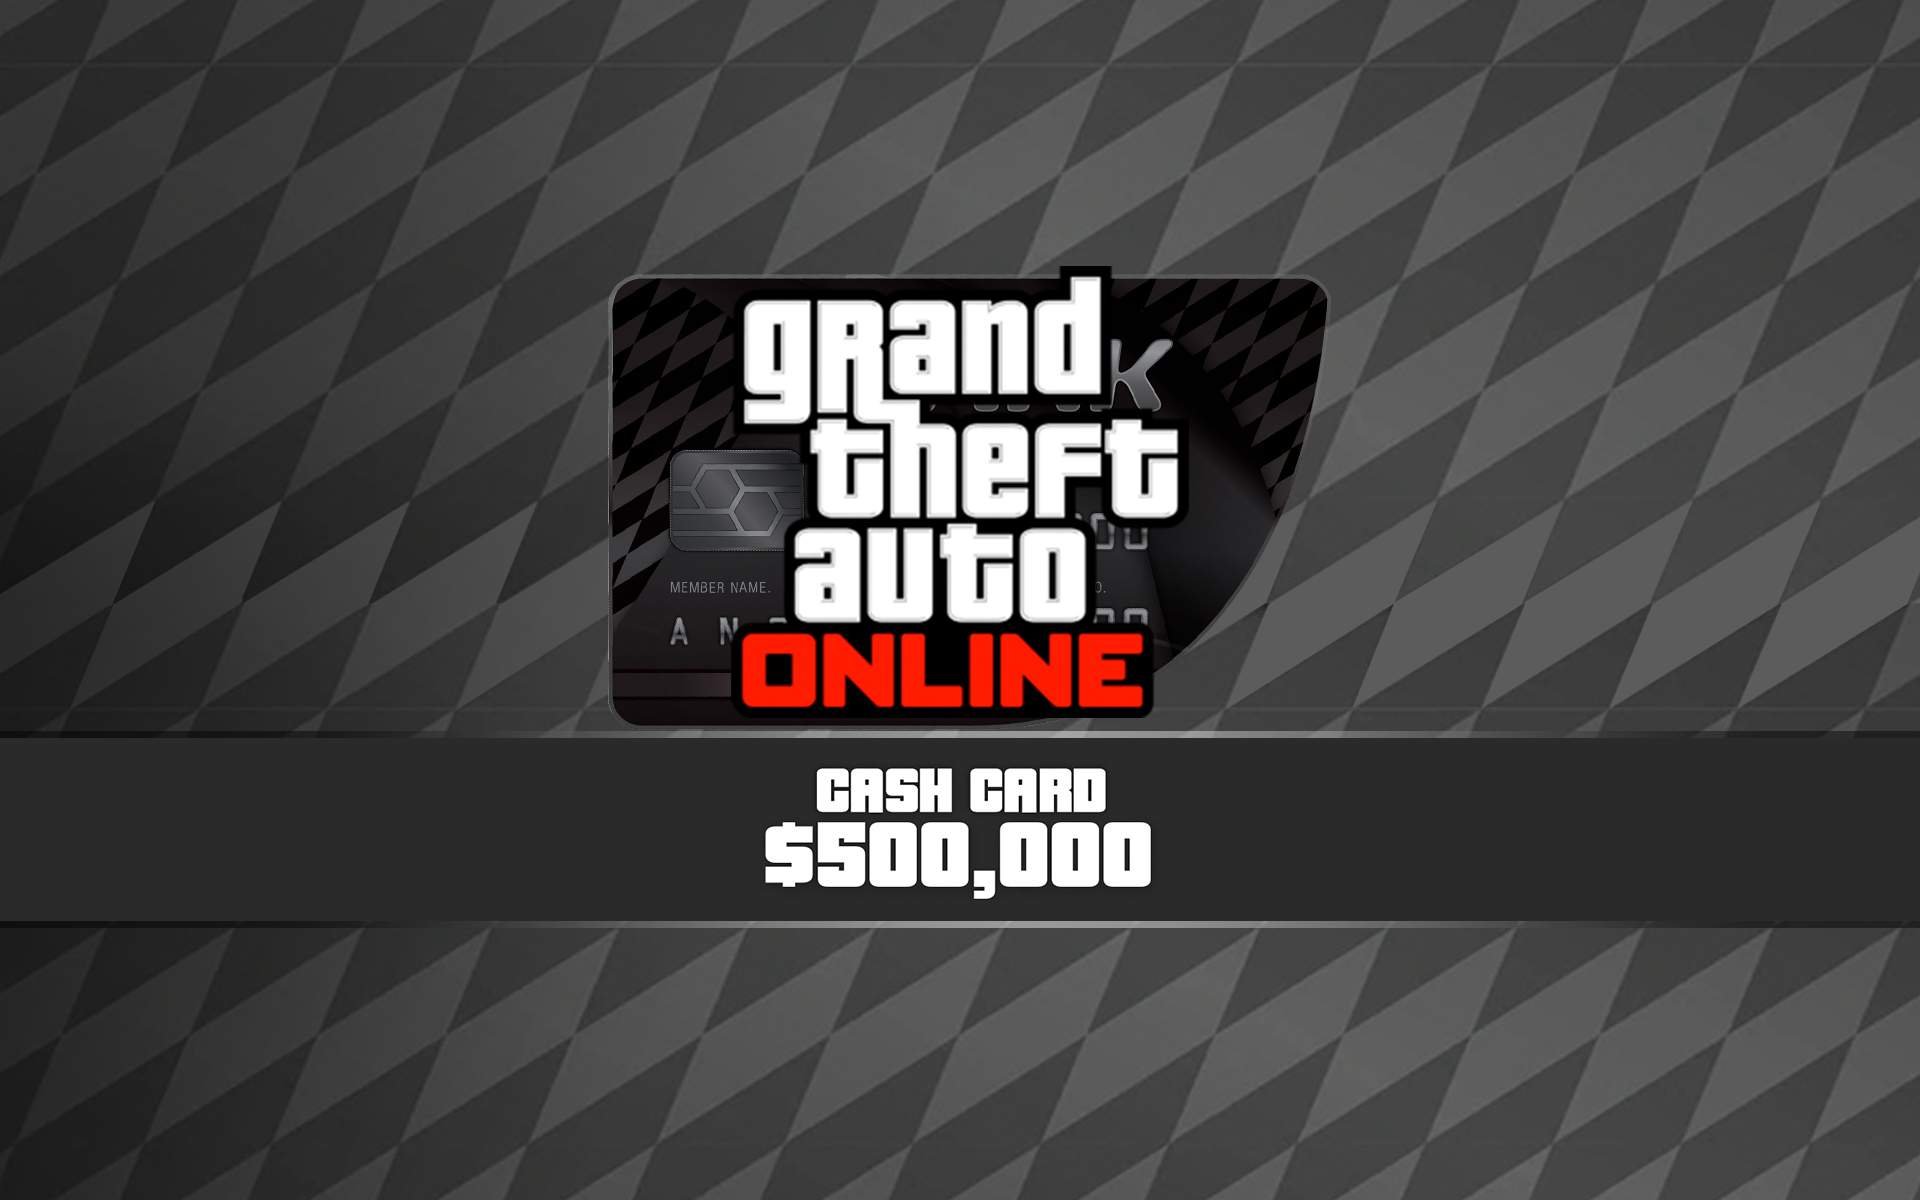 Grand Theft Auto Online Bull Shark Cash Card cover